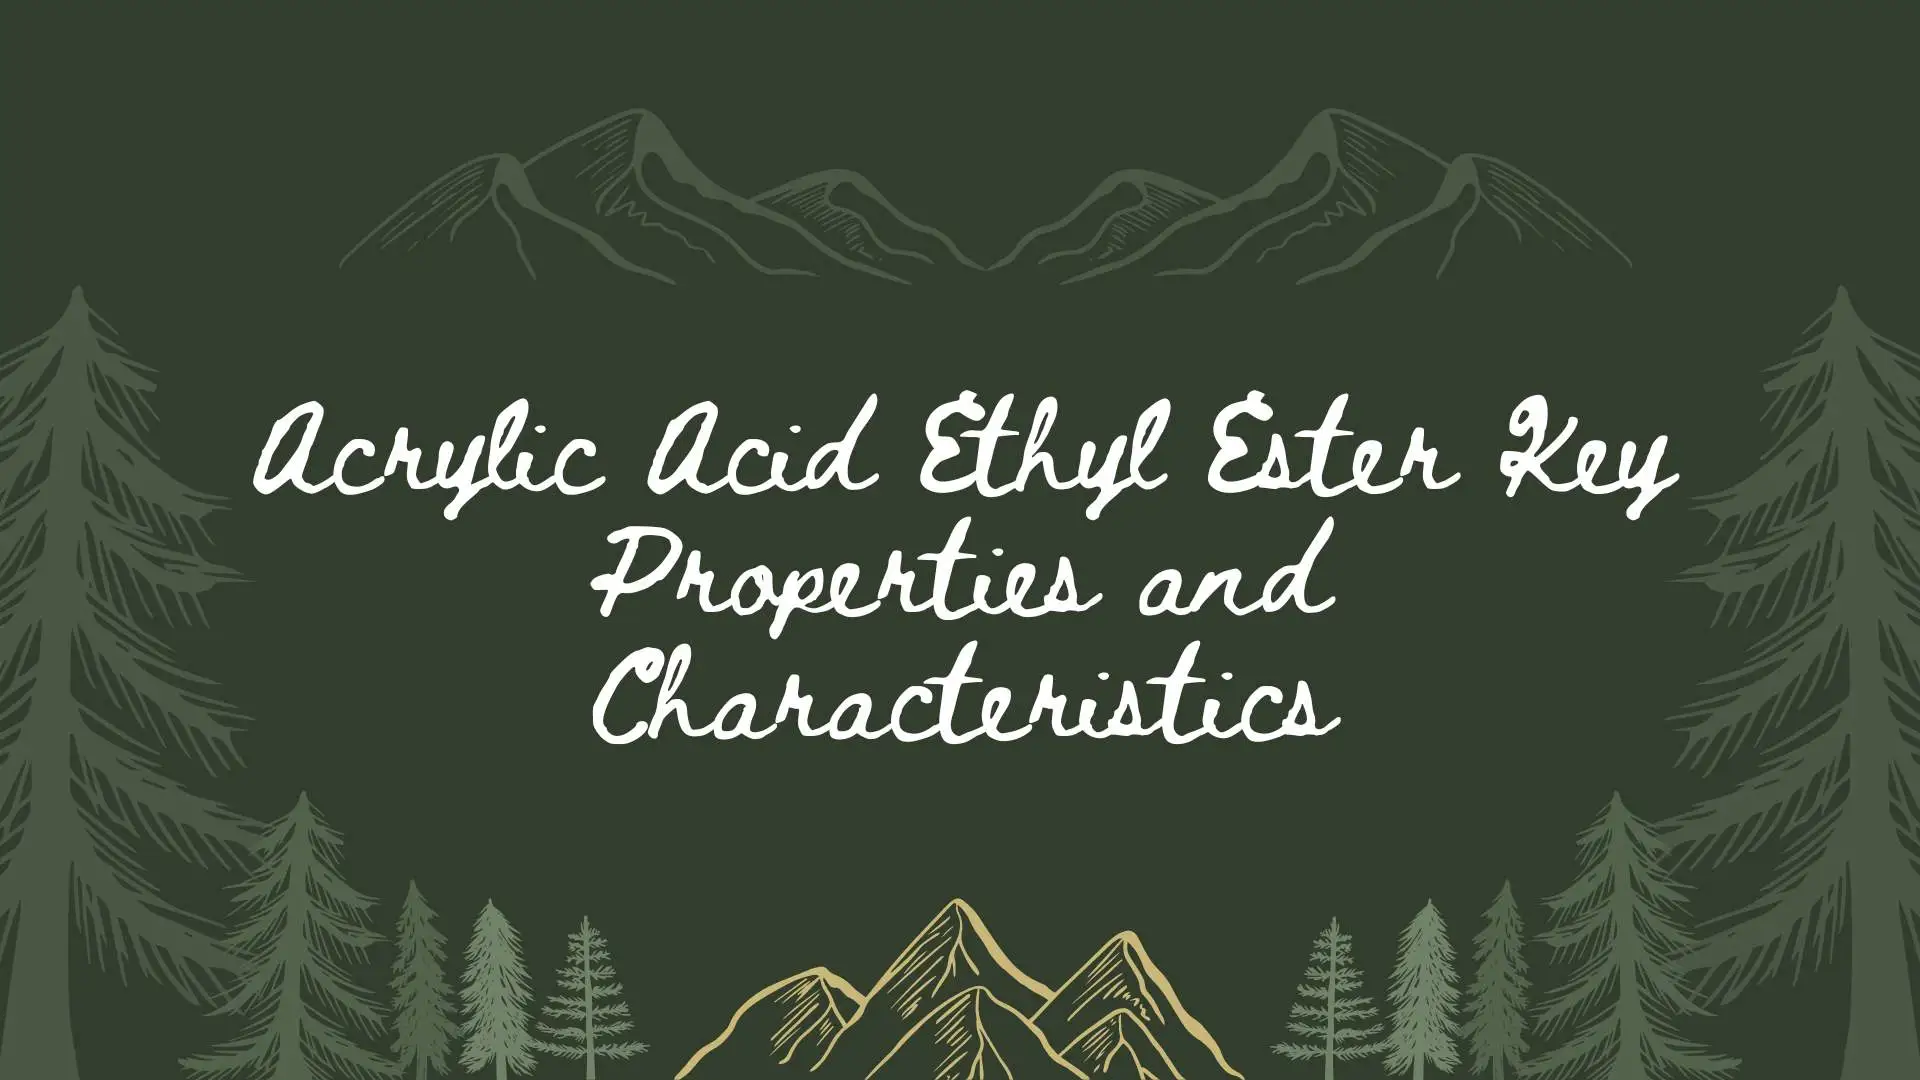 Acrylic Acid Ethyl Ester Key Properties and Characteristics